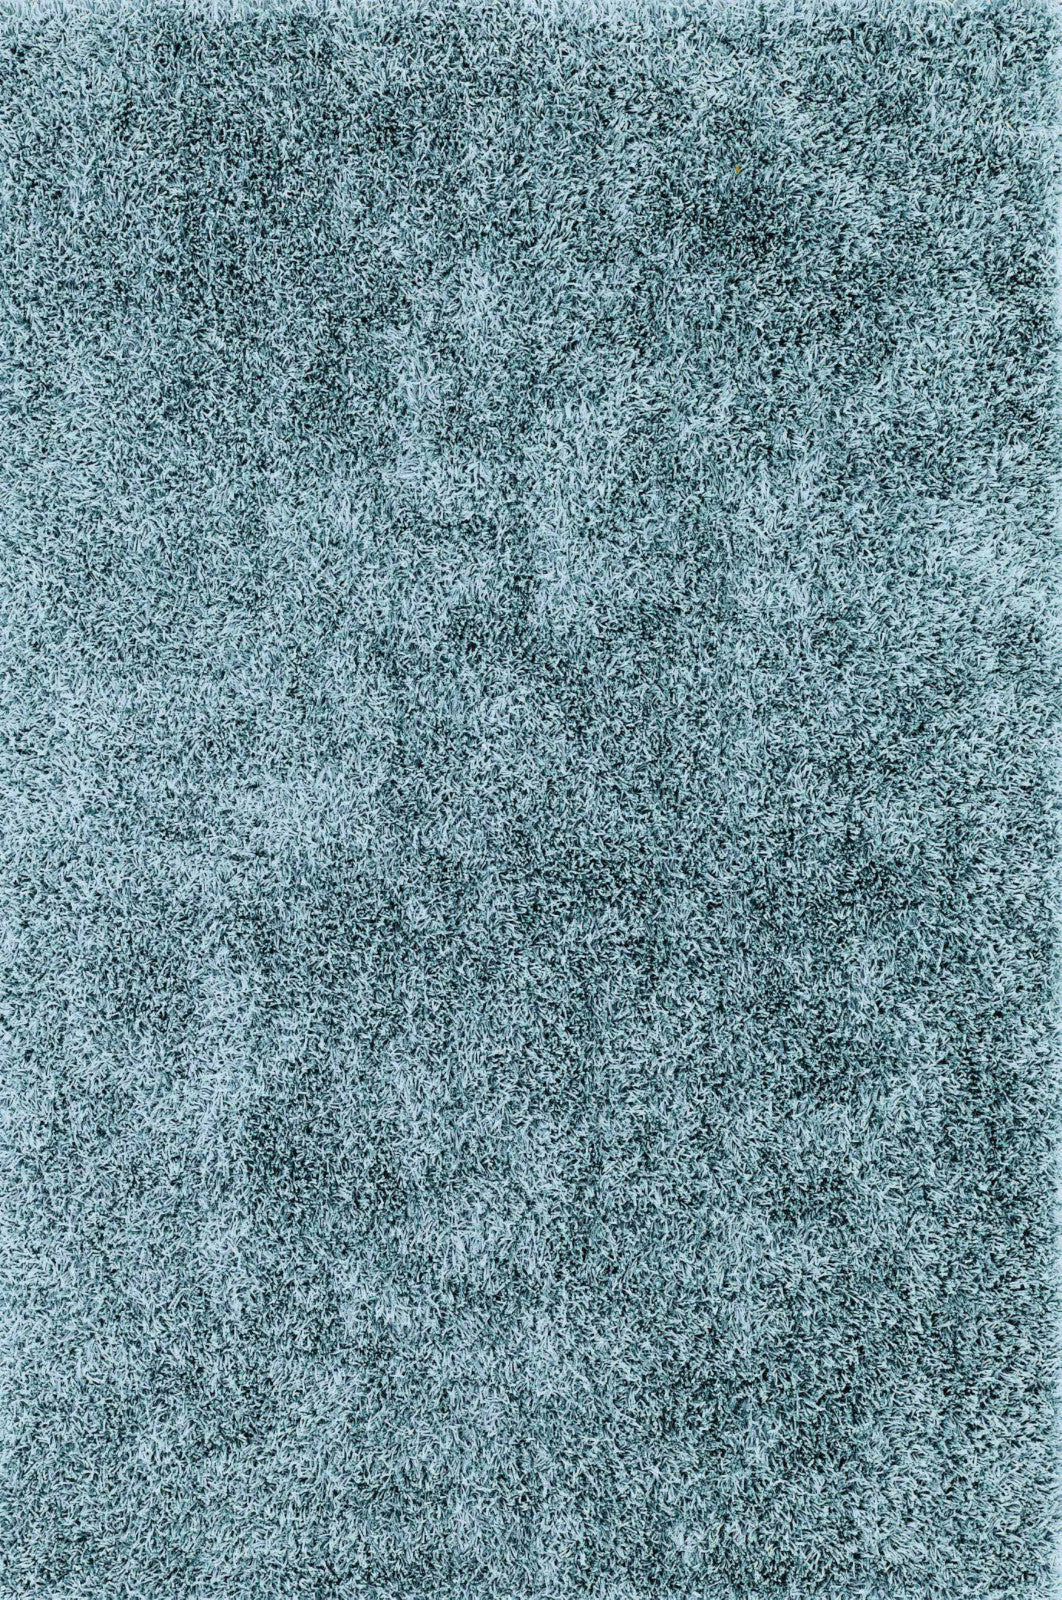 Dalyn Illusions IL69 Sky Blue Area Rug main image